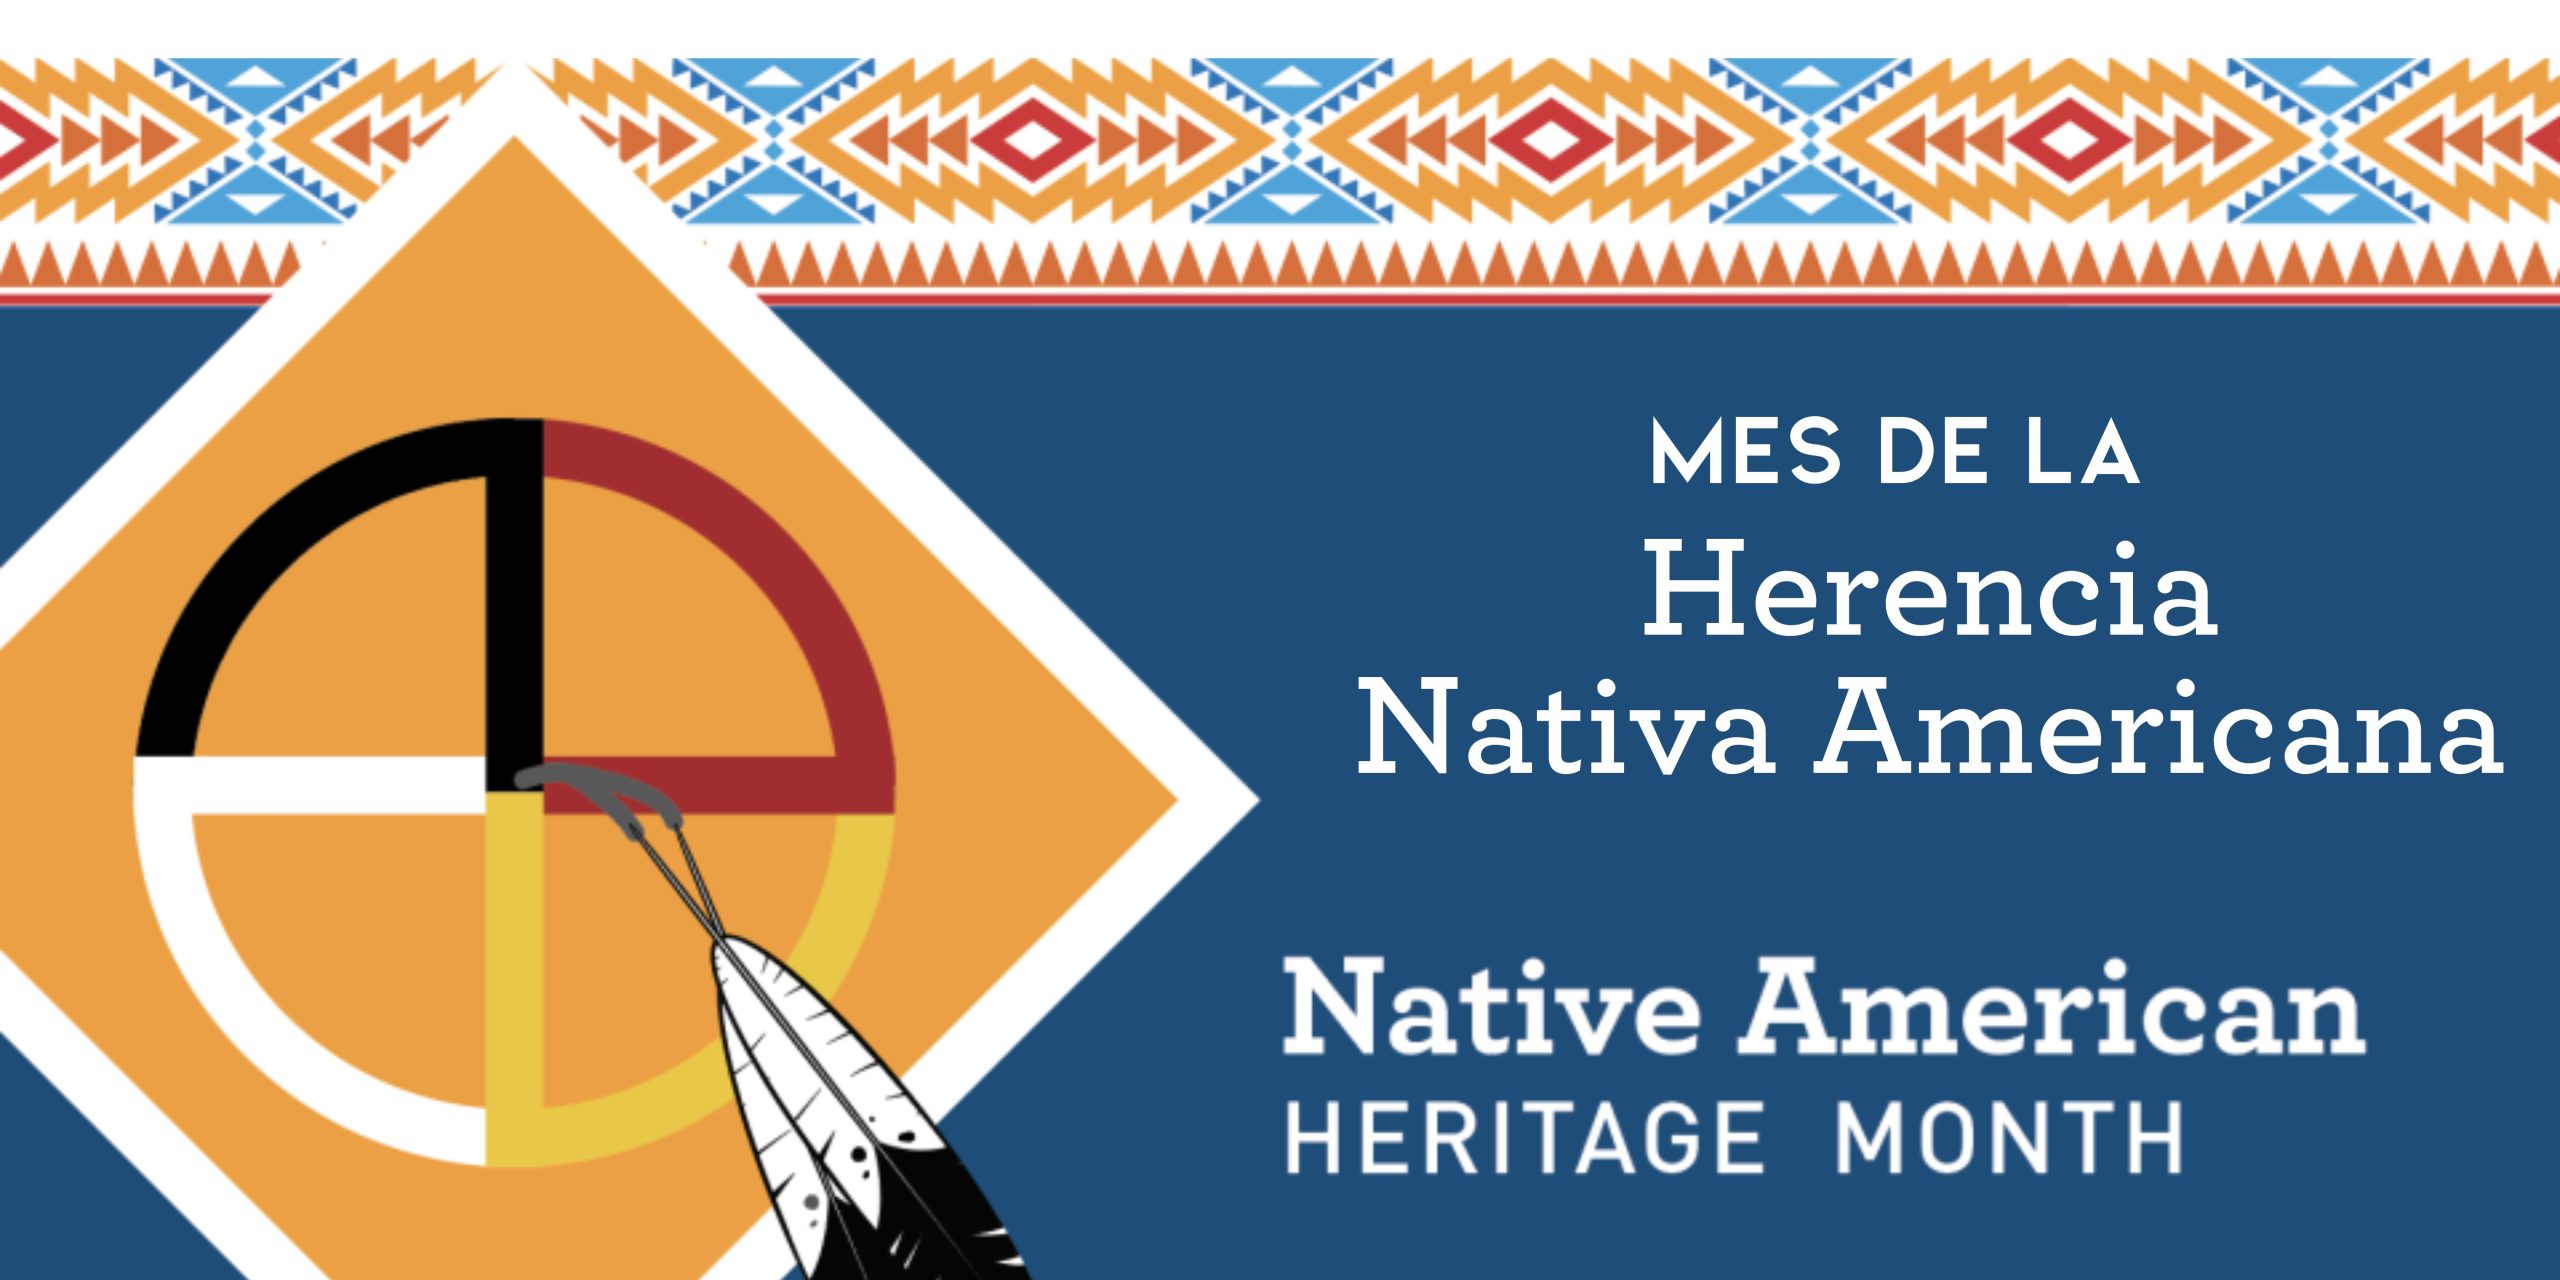 "Mes de la herencia nativa americana" and "Native American Heritage Month"